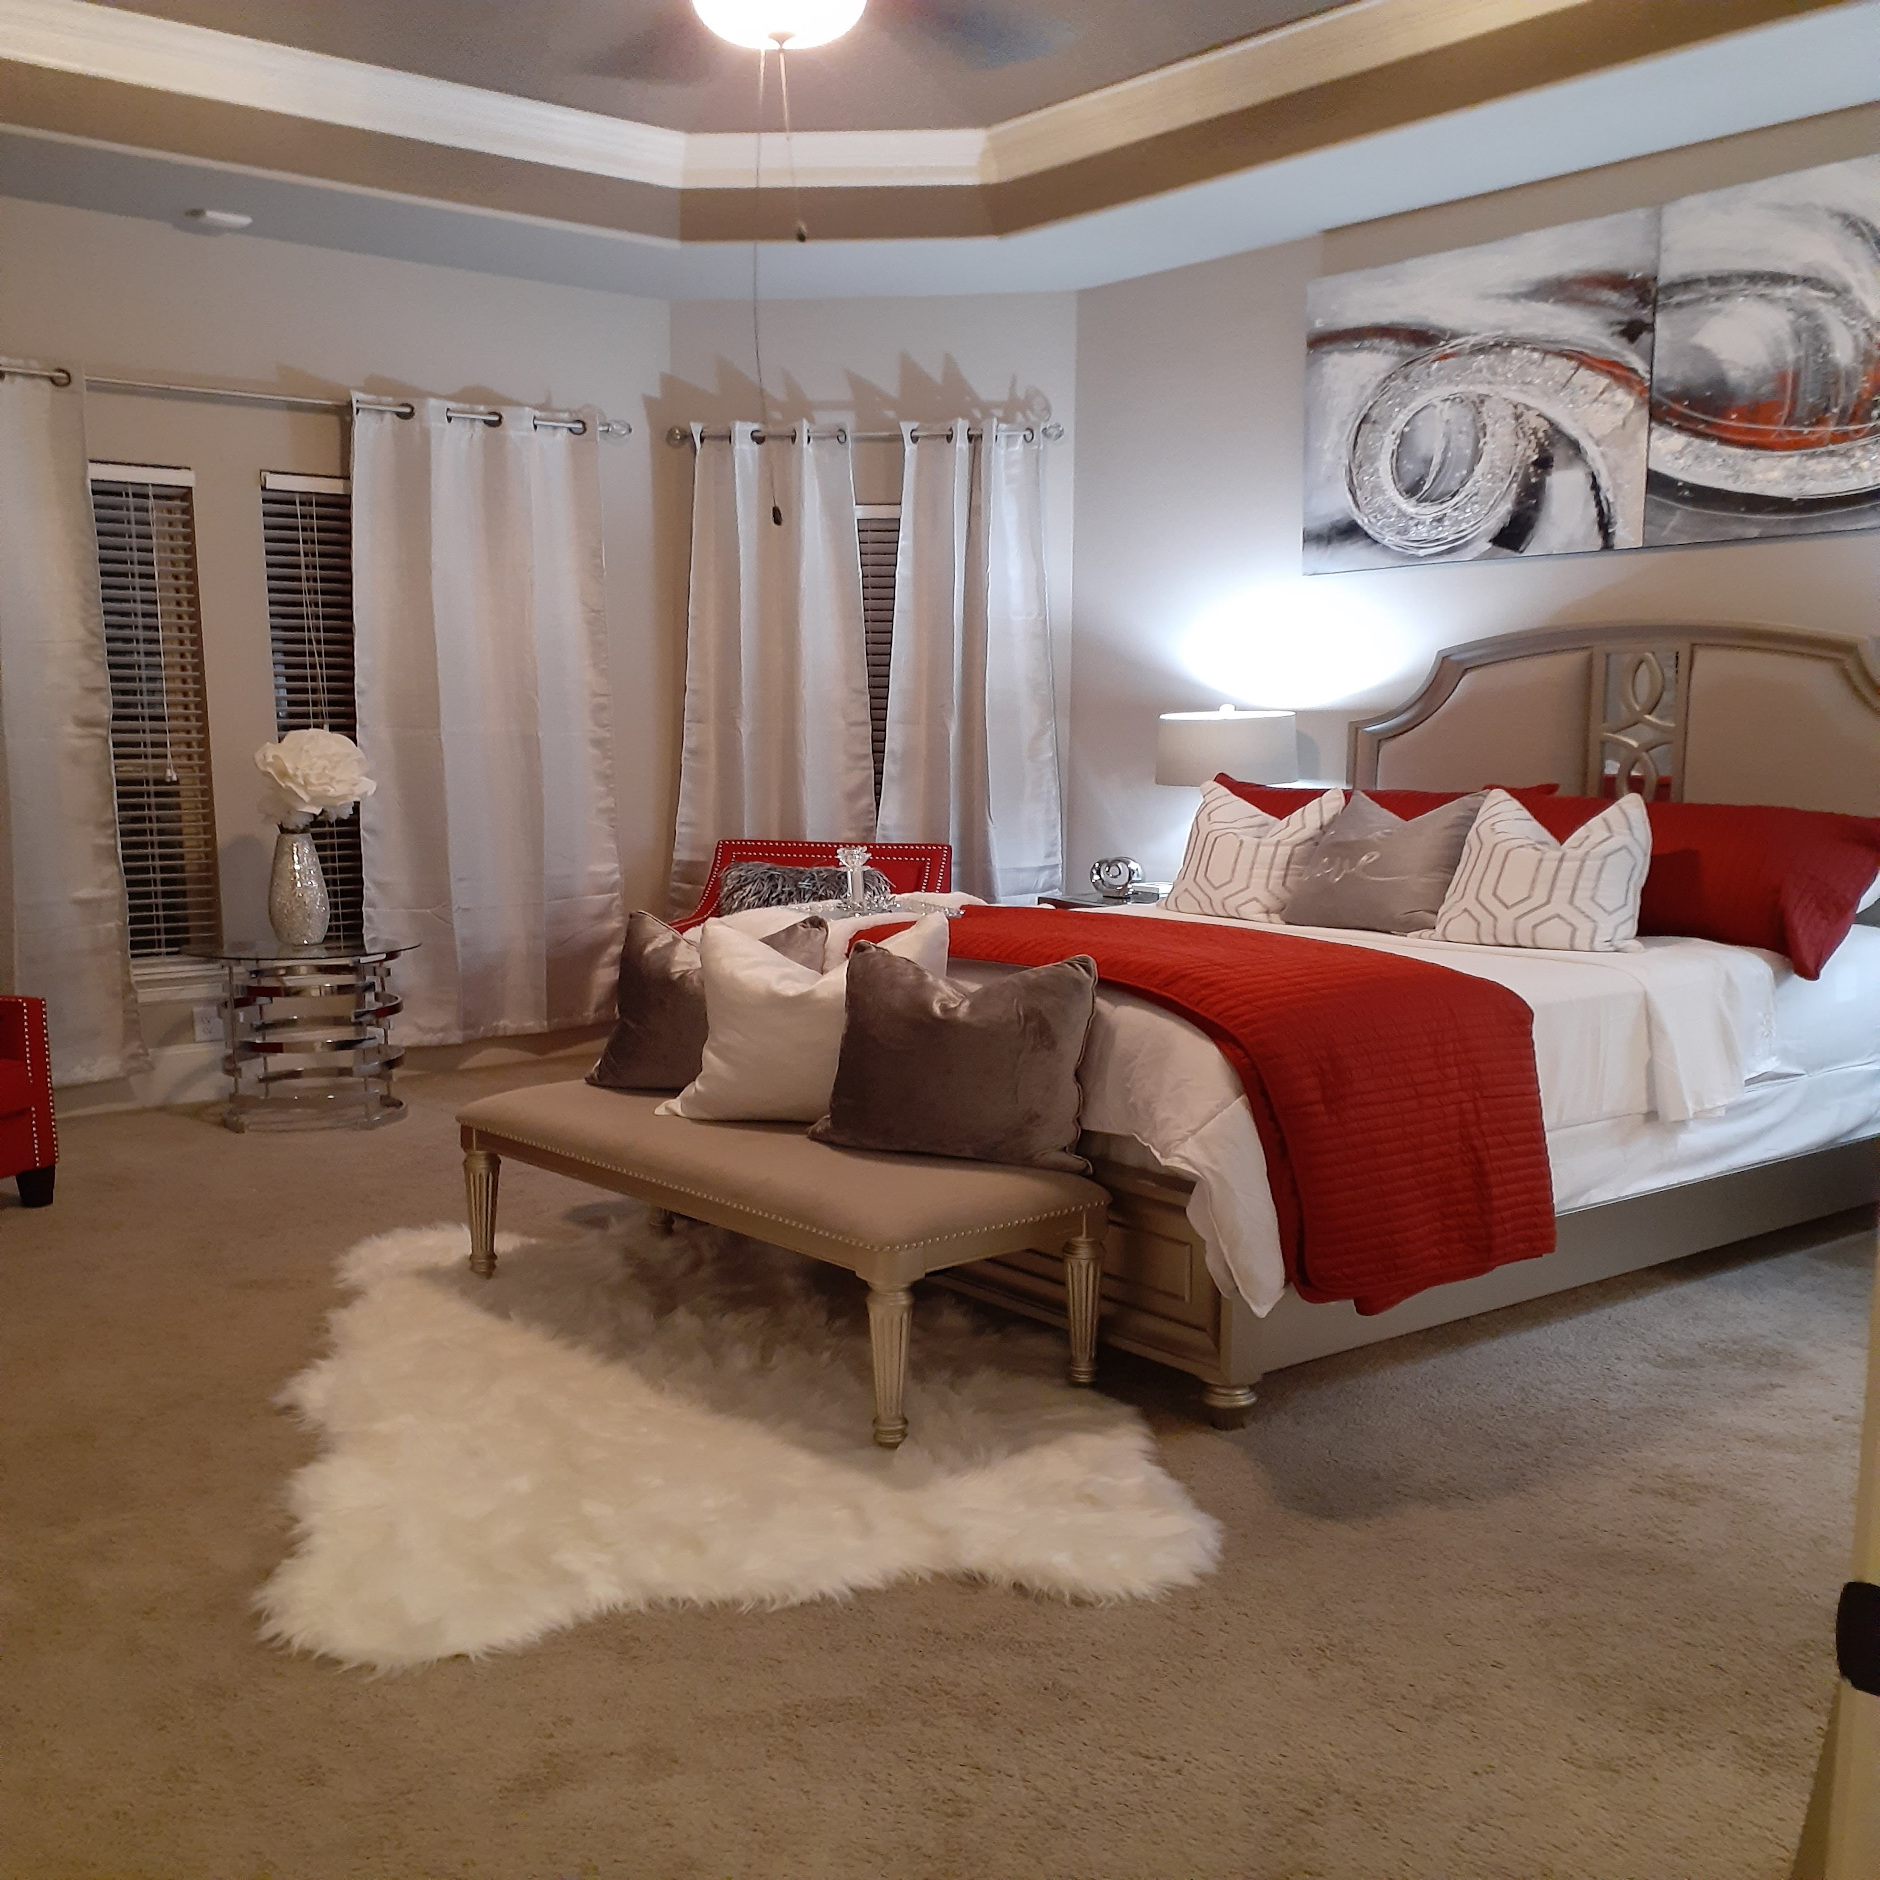 Amazing Bedroom interior design